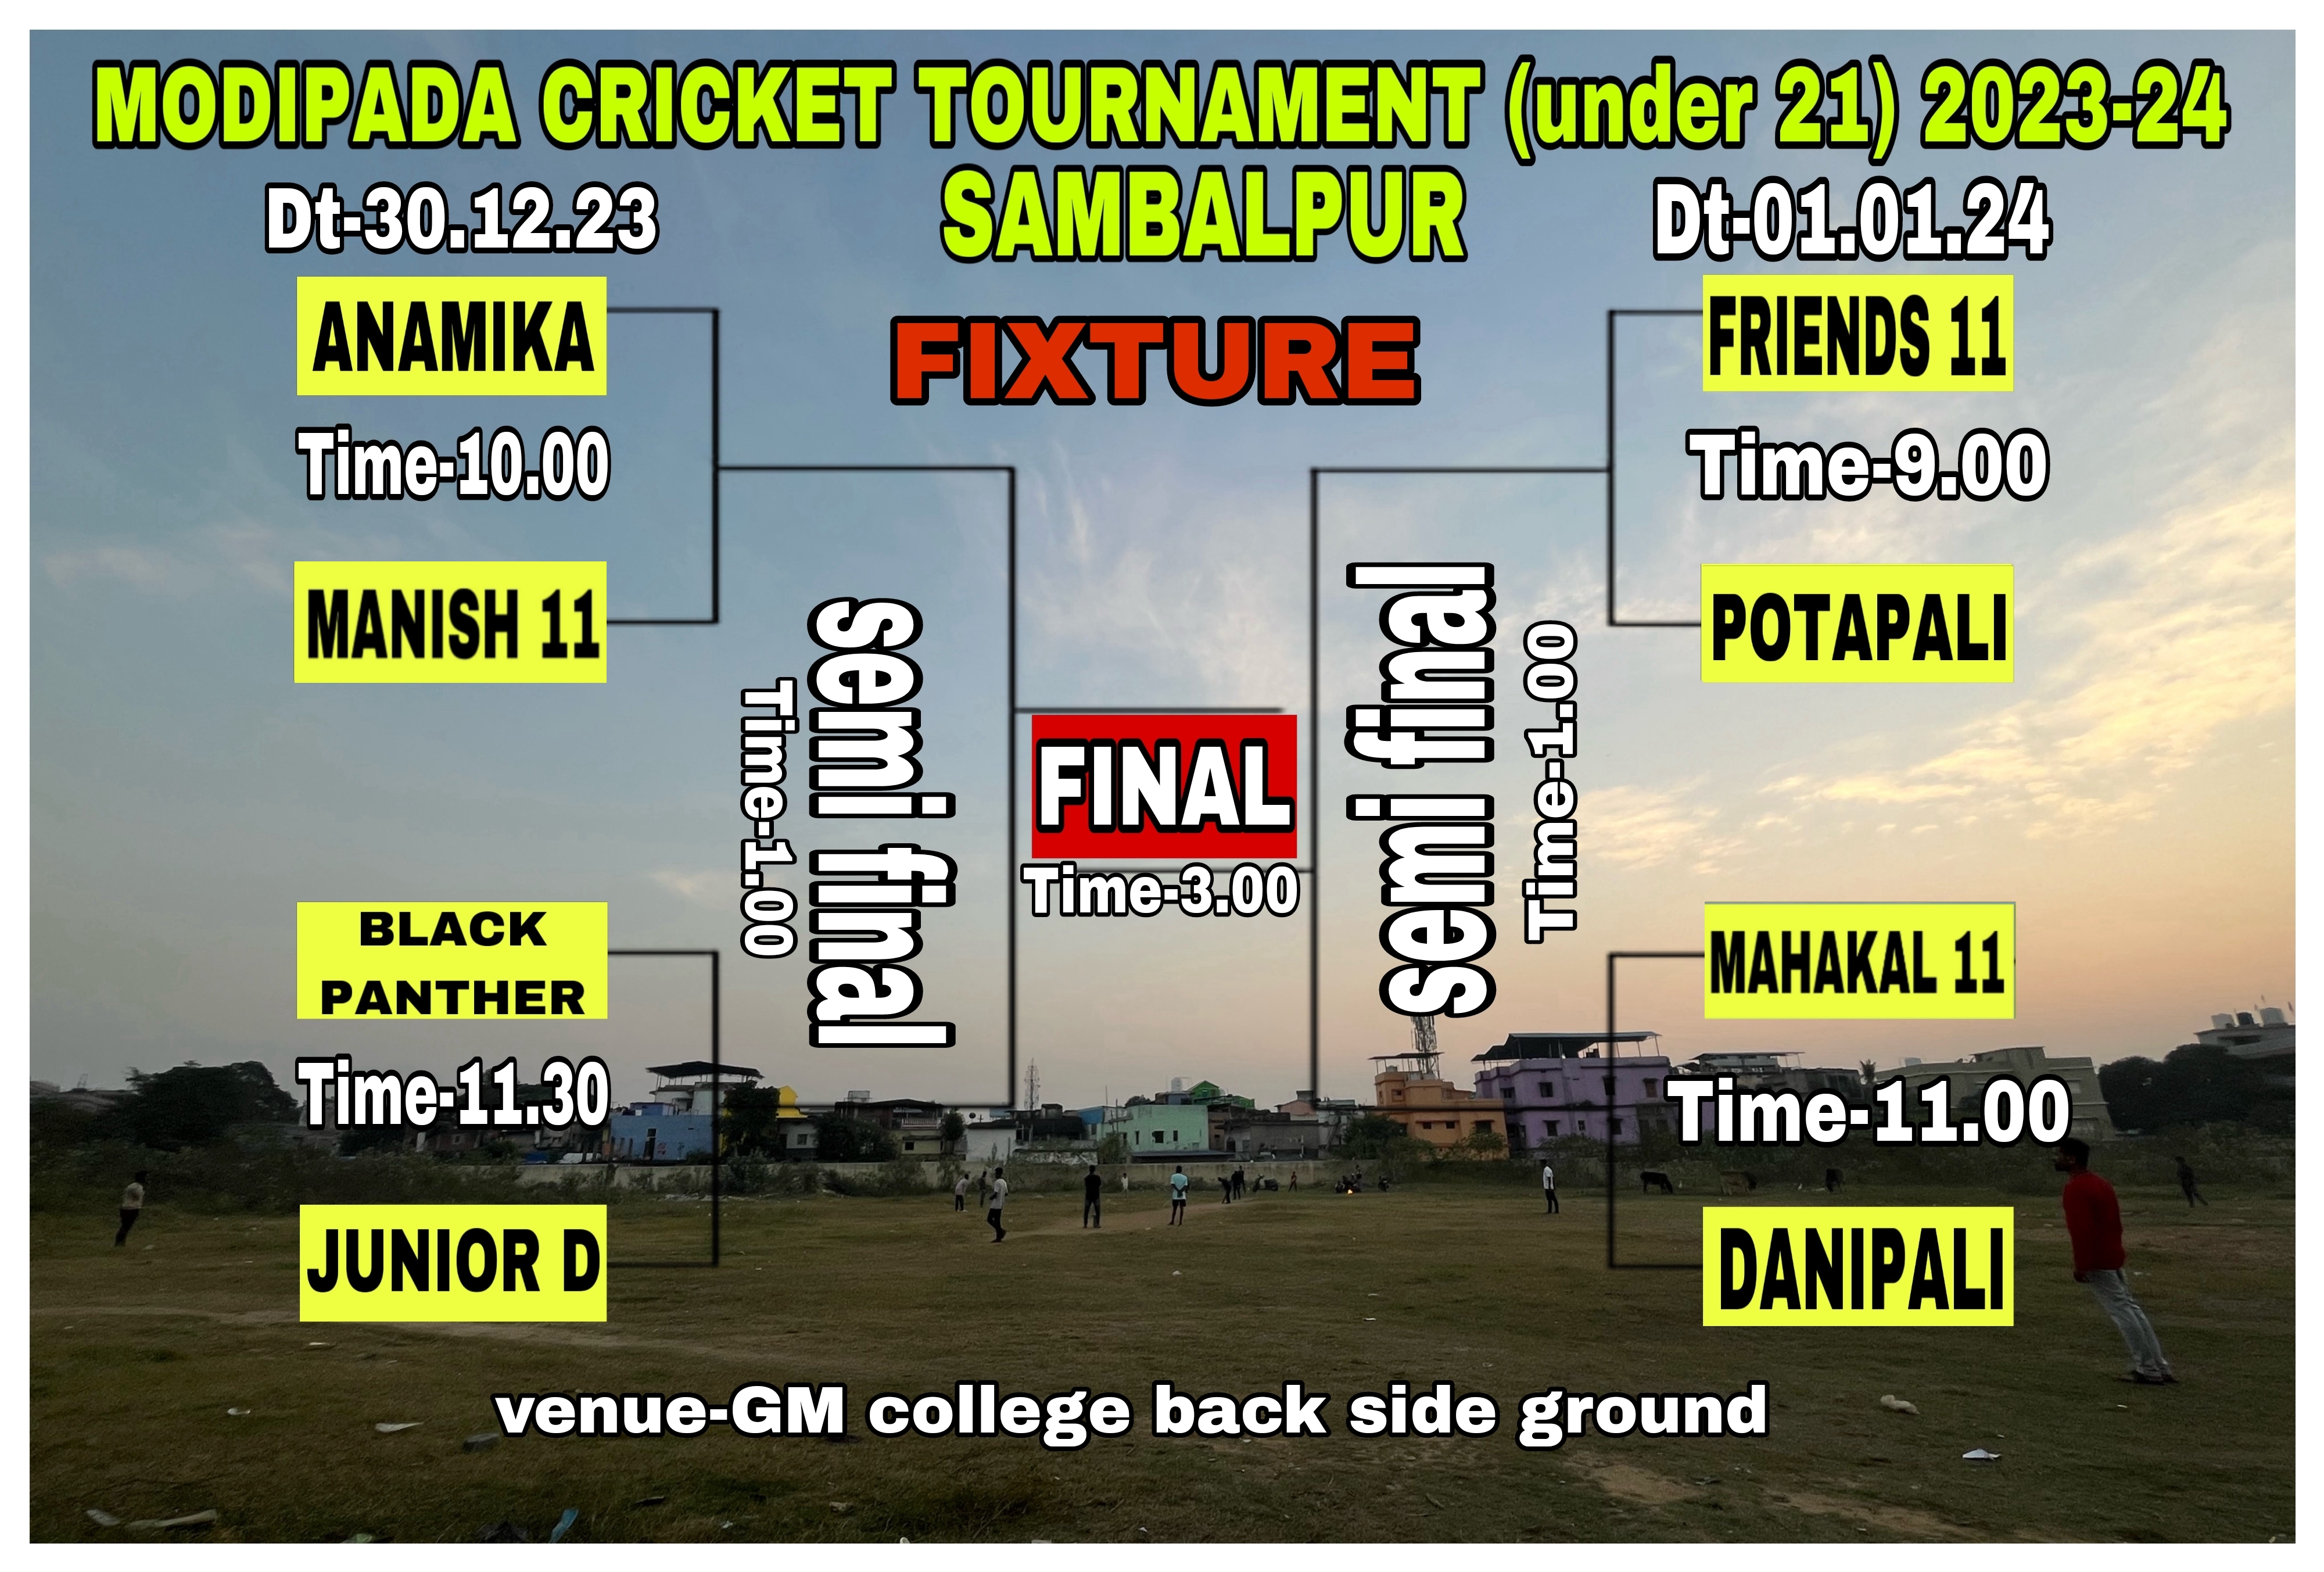 MODIPADA CRICKET TOURNAMENT (UNDER21)2023-24,SAMBALPUR